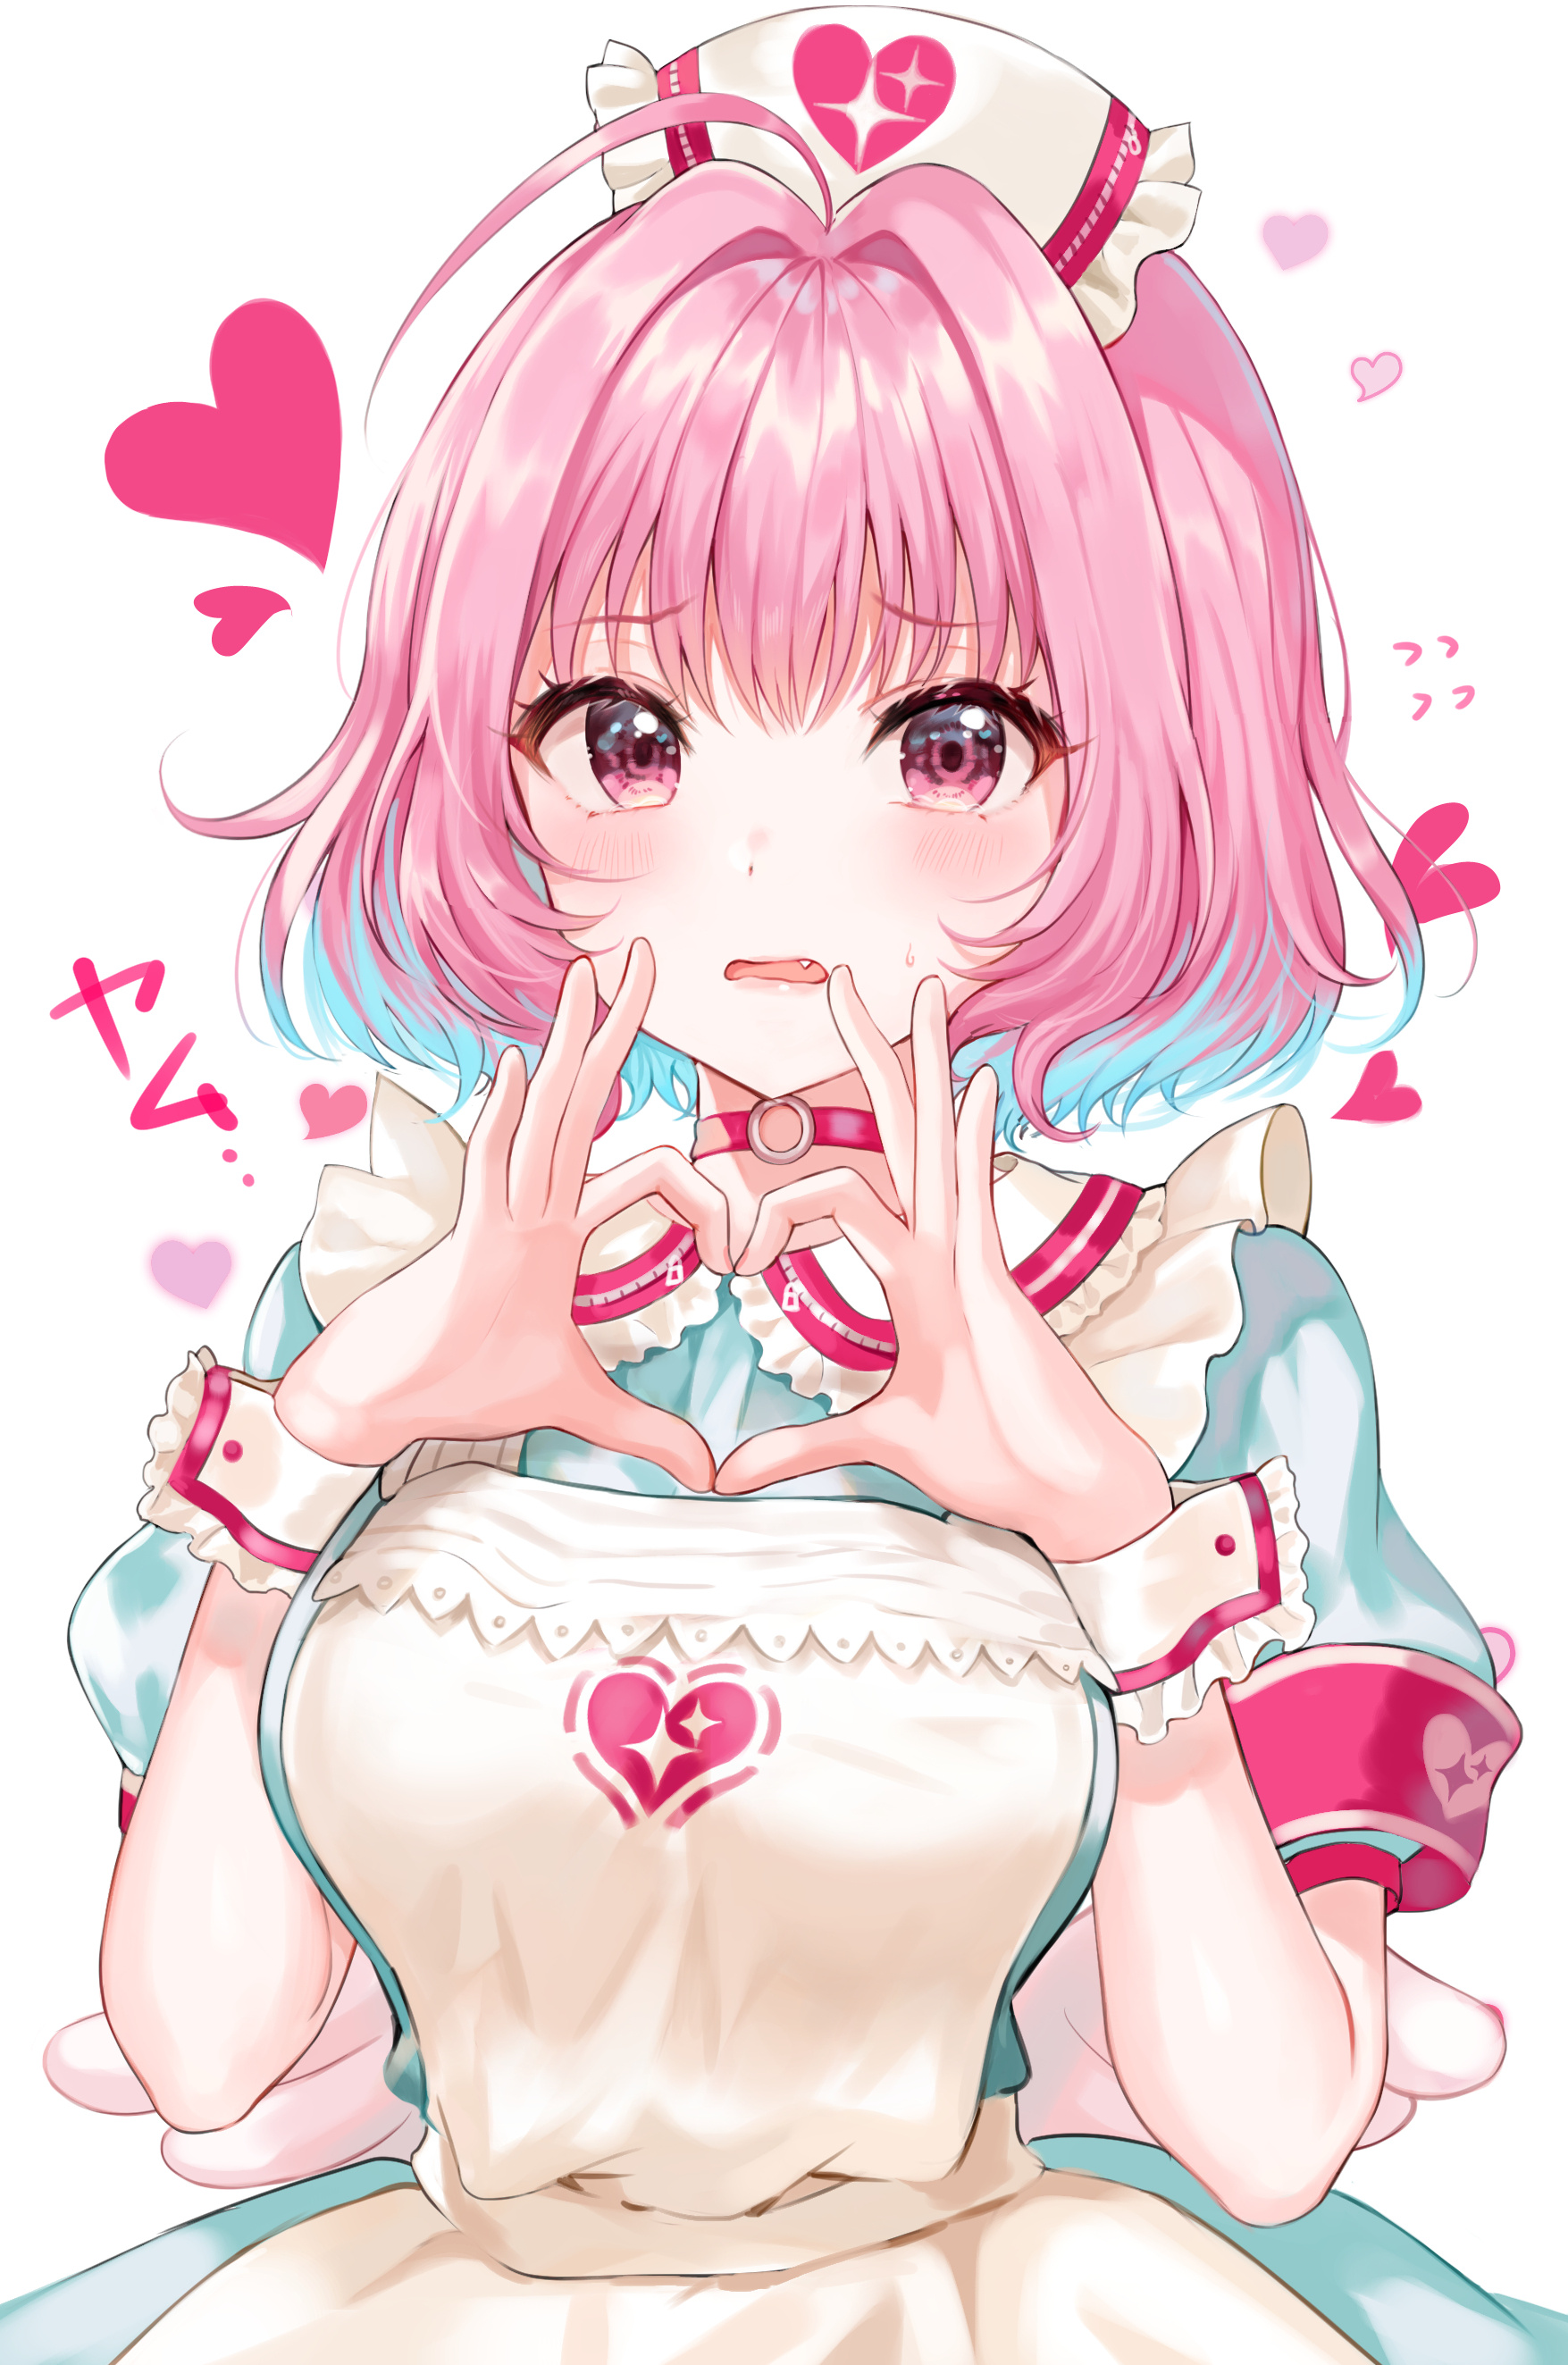 Wallpaper ID: 167322 / cute, pretty, girl, anime, beautiful, hands heart  form free download